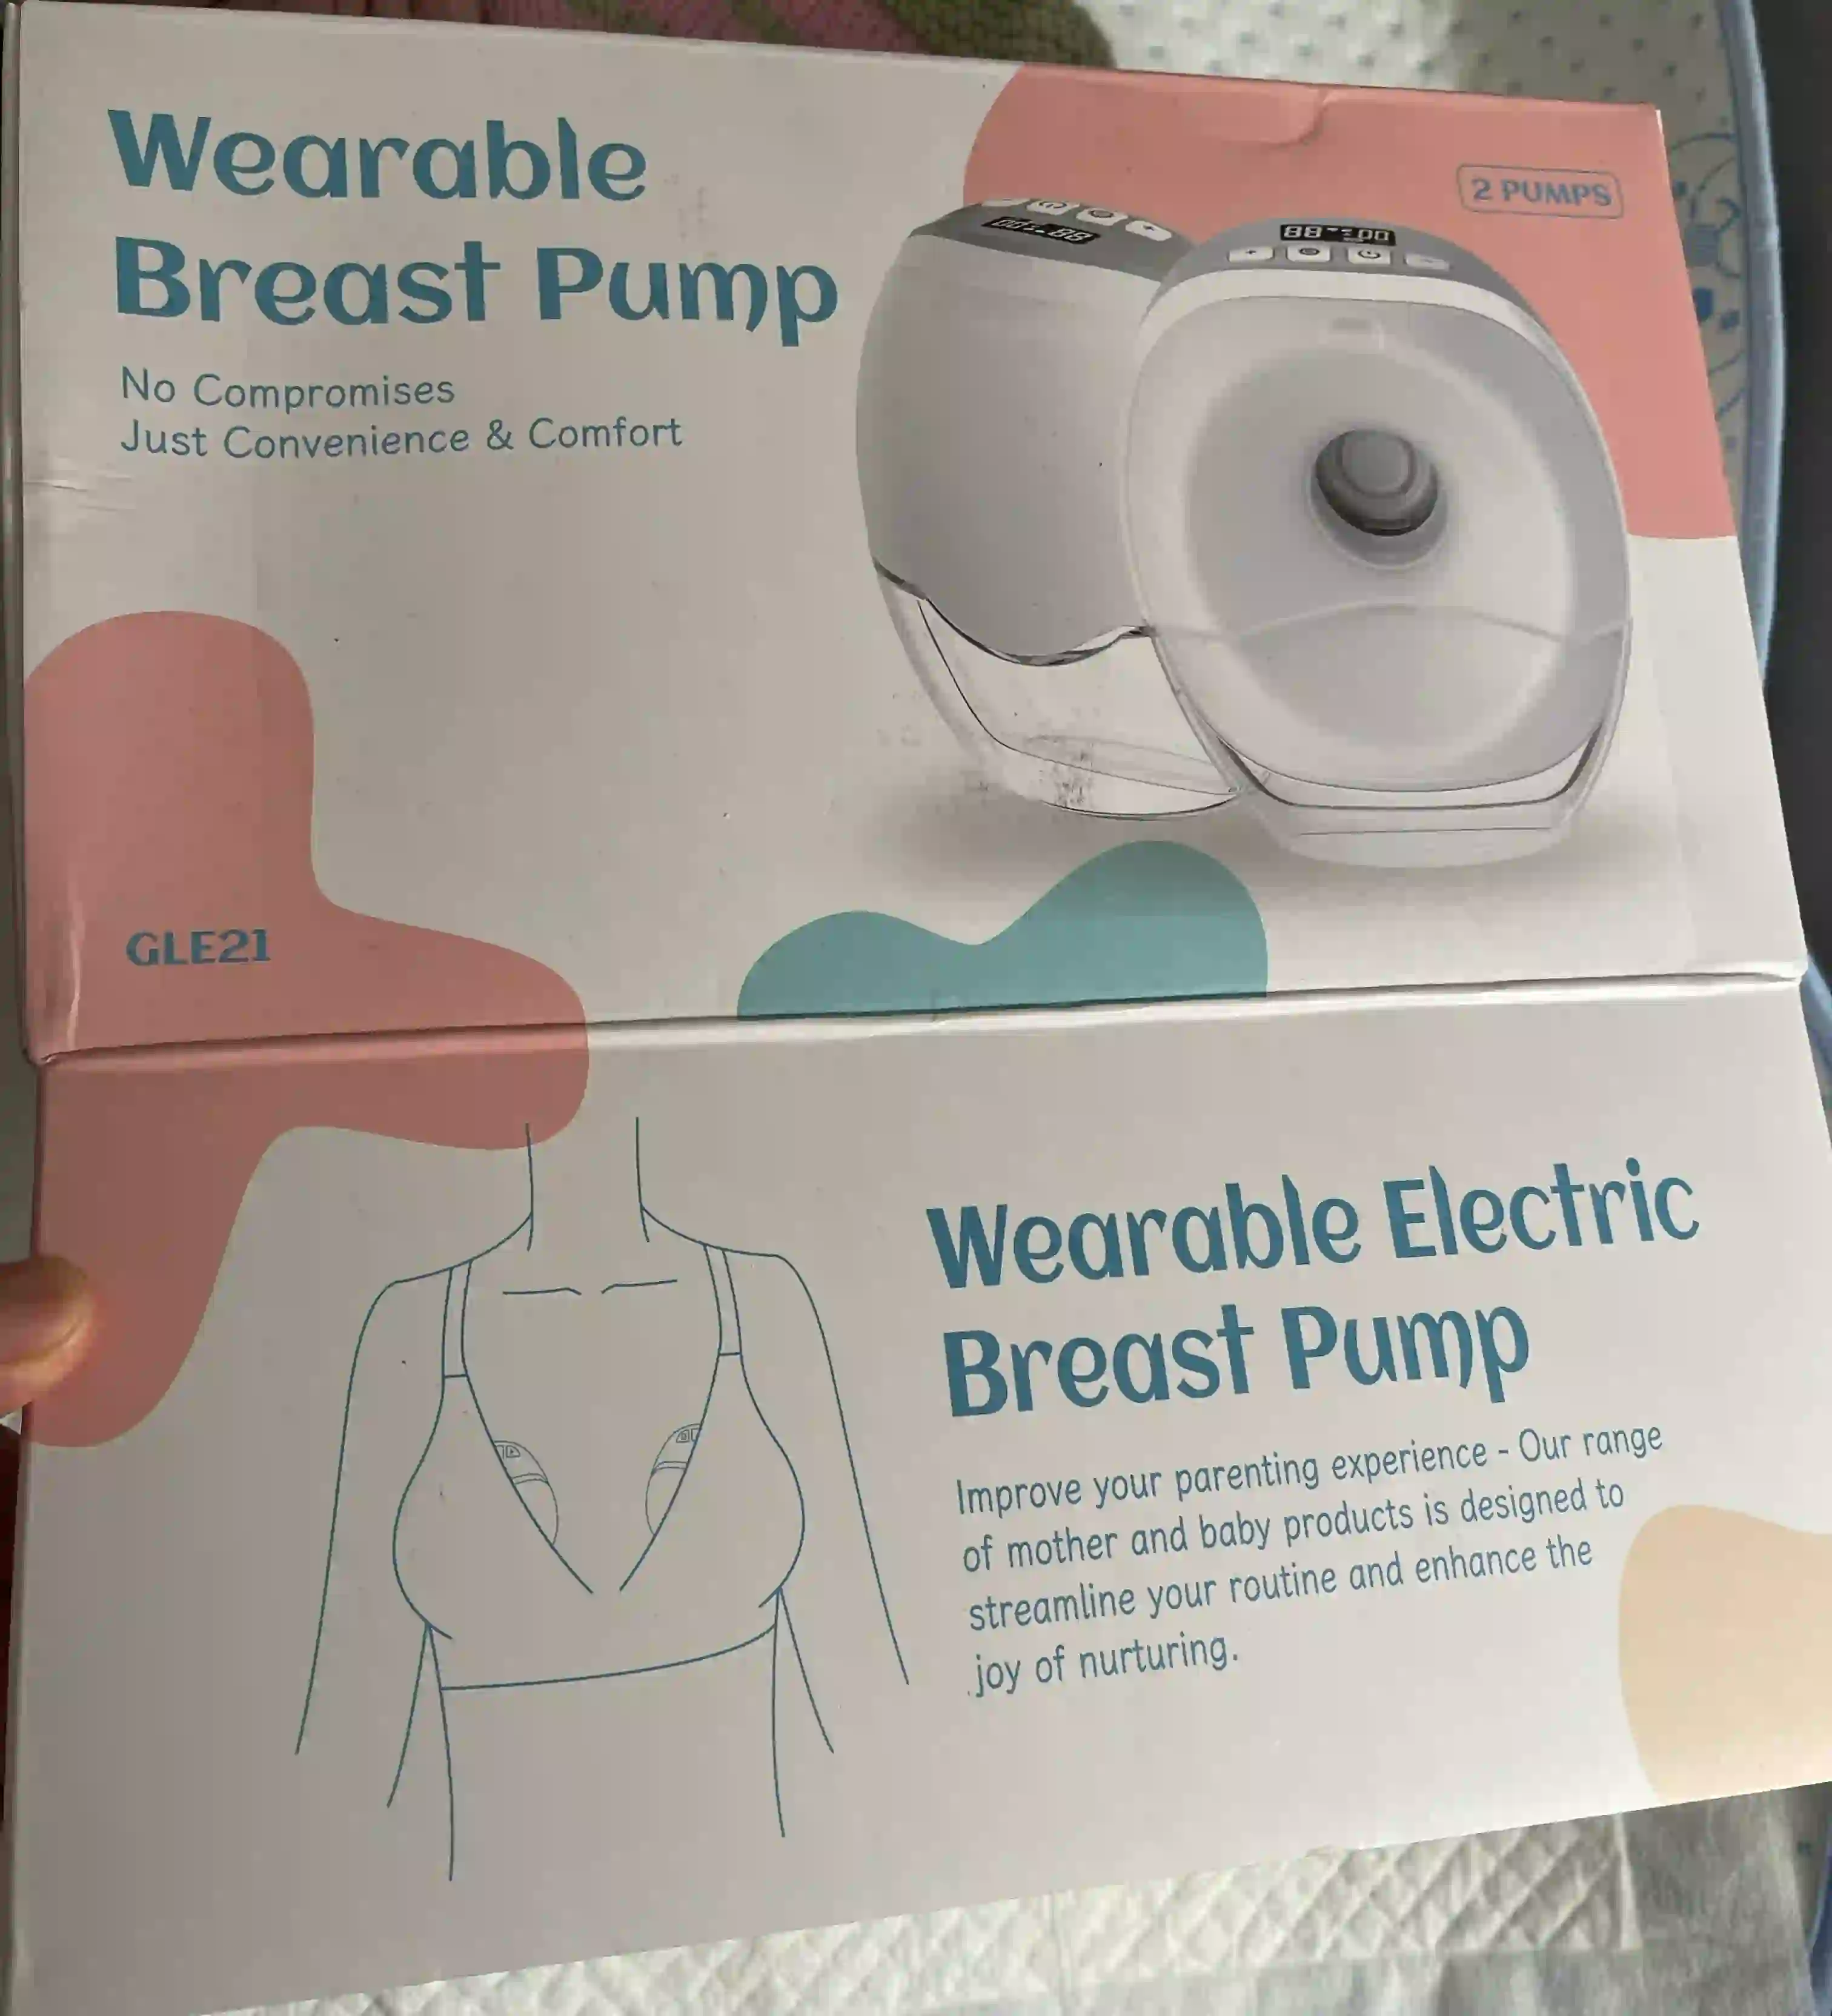 Wearable Breast Pump CA$90